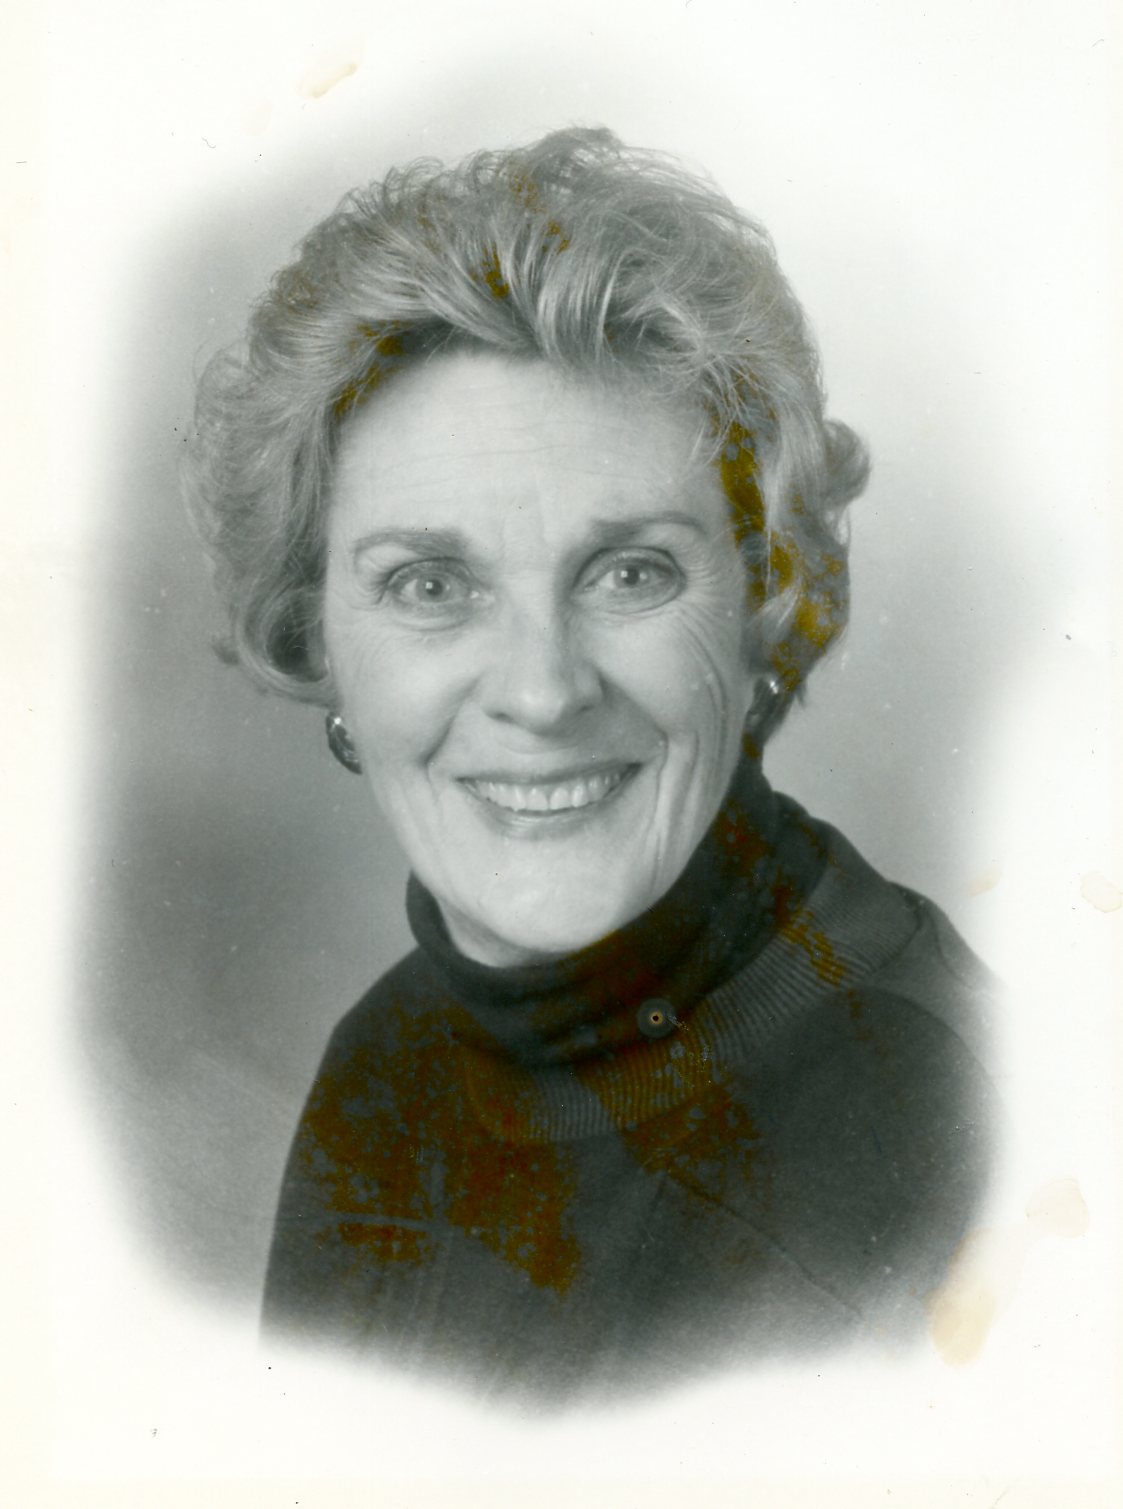 Obituary information for Ruth Bain Gurtis